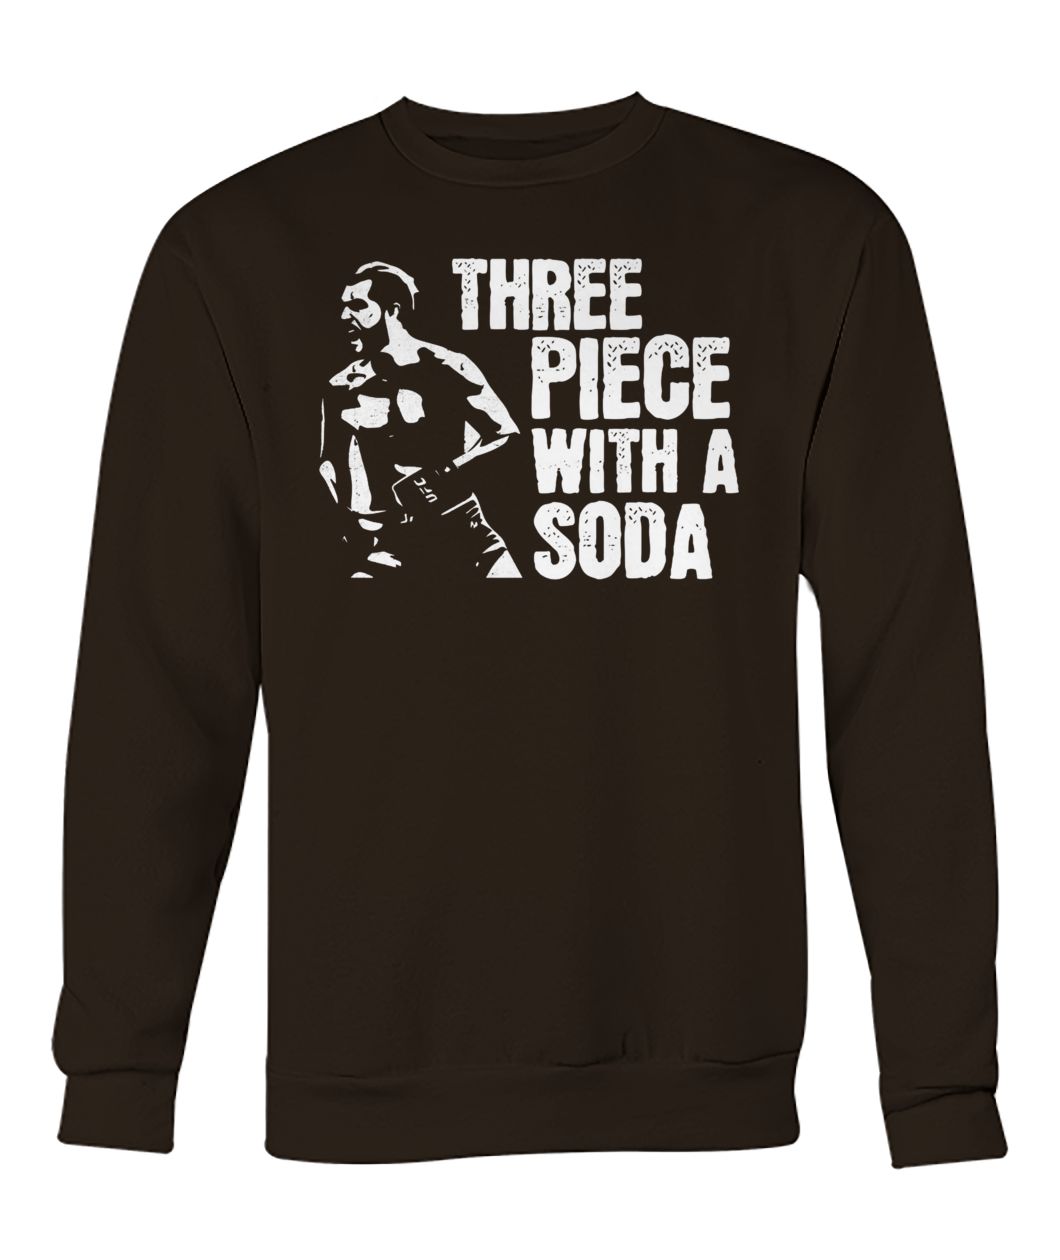 Three piece and a soda Jorge Masvidal crew neck sweatshirt